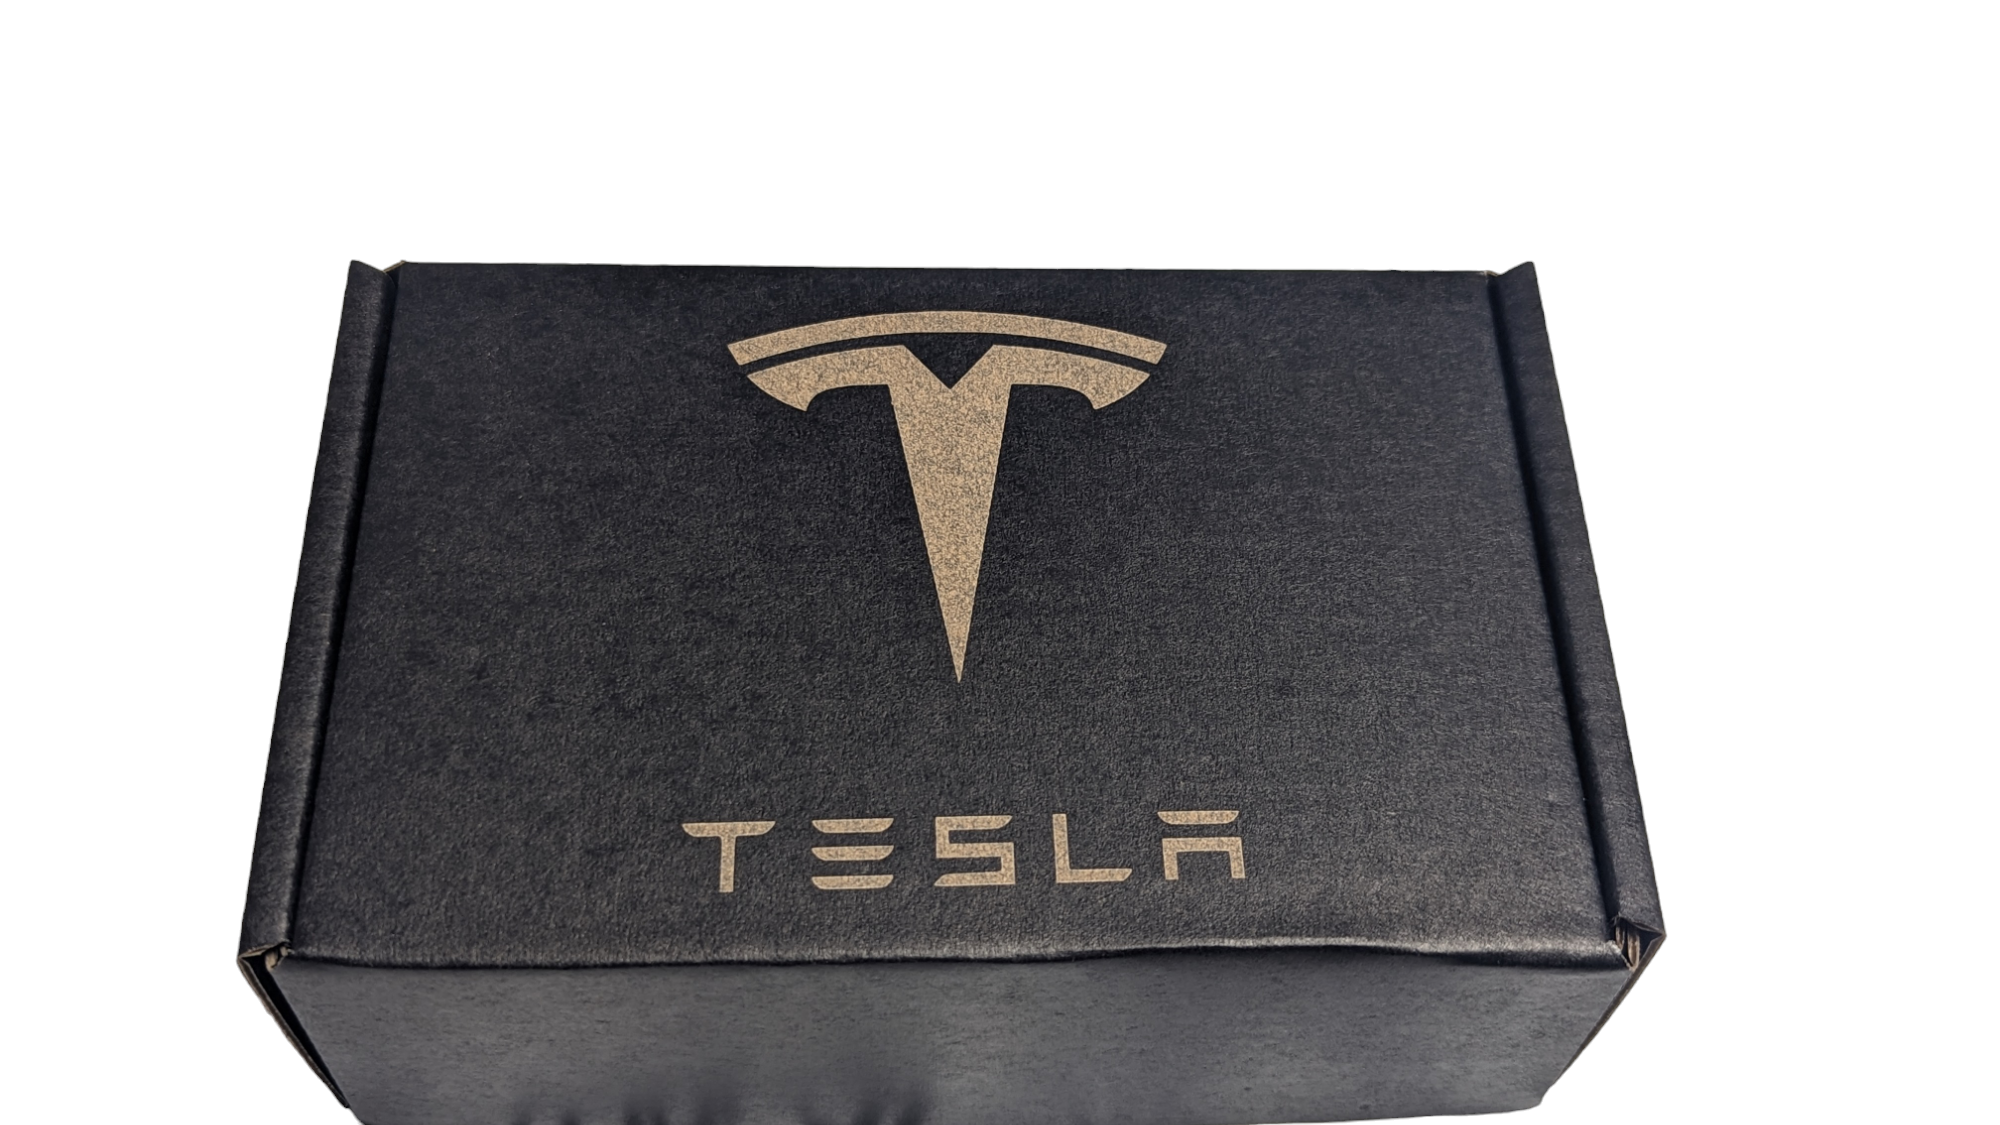 Black Genuine Leather, Tesla inspired Wallet Swolit RFID Blocker Gift Boxed